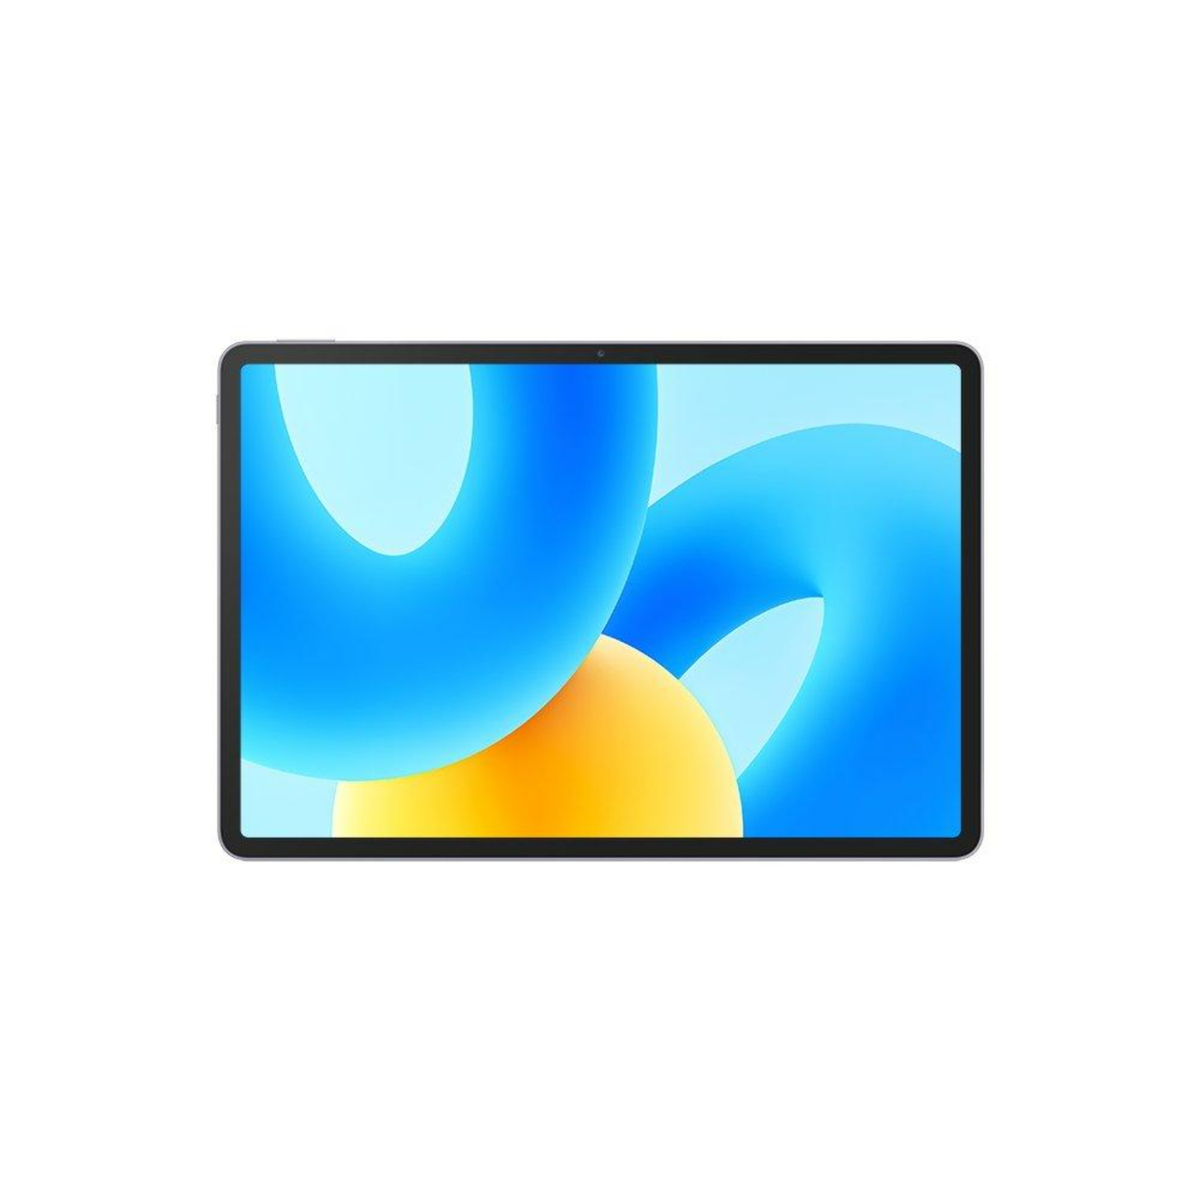 HUAWEI MatePad 11.5 inches Tablet + Detachable Keyboard, 8 GB RAM, 128 GB Storage, Space Grey, Bartok-W09C